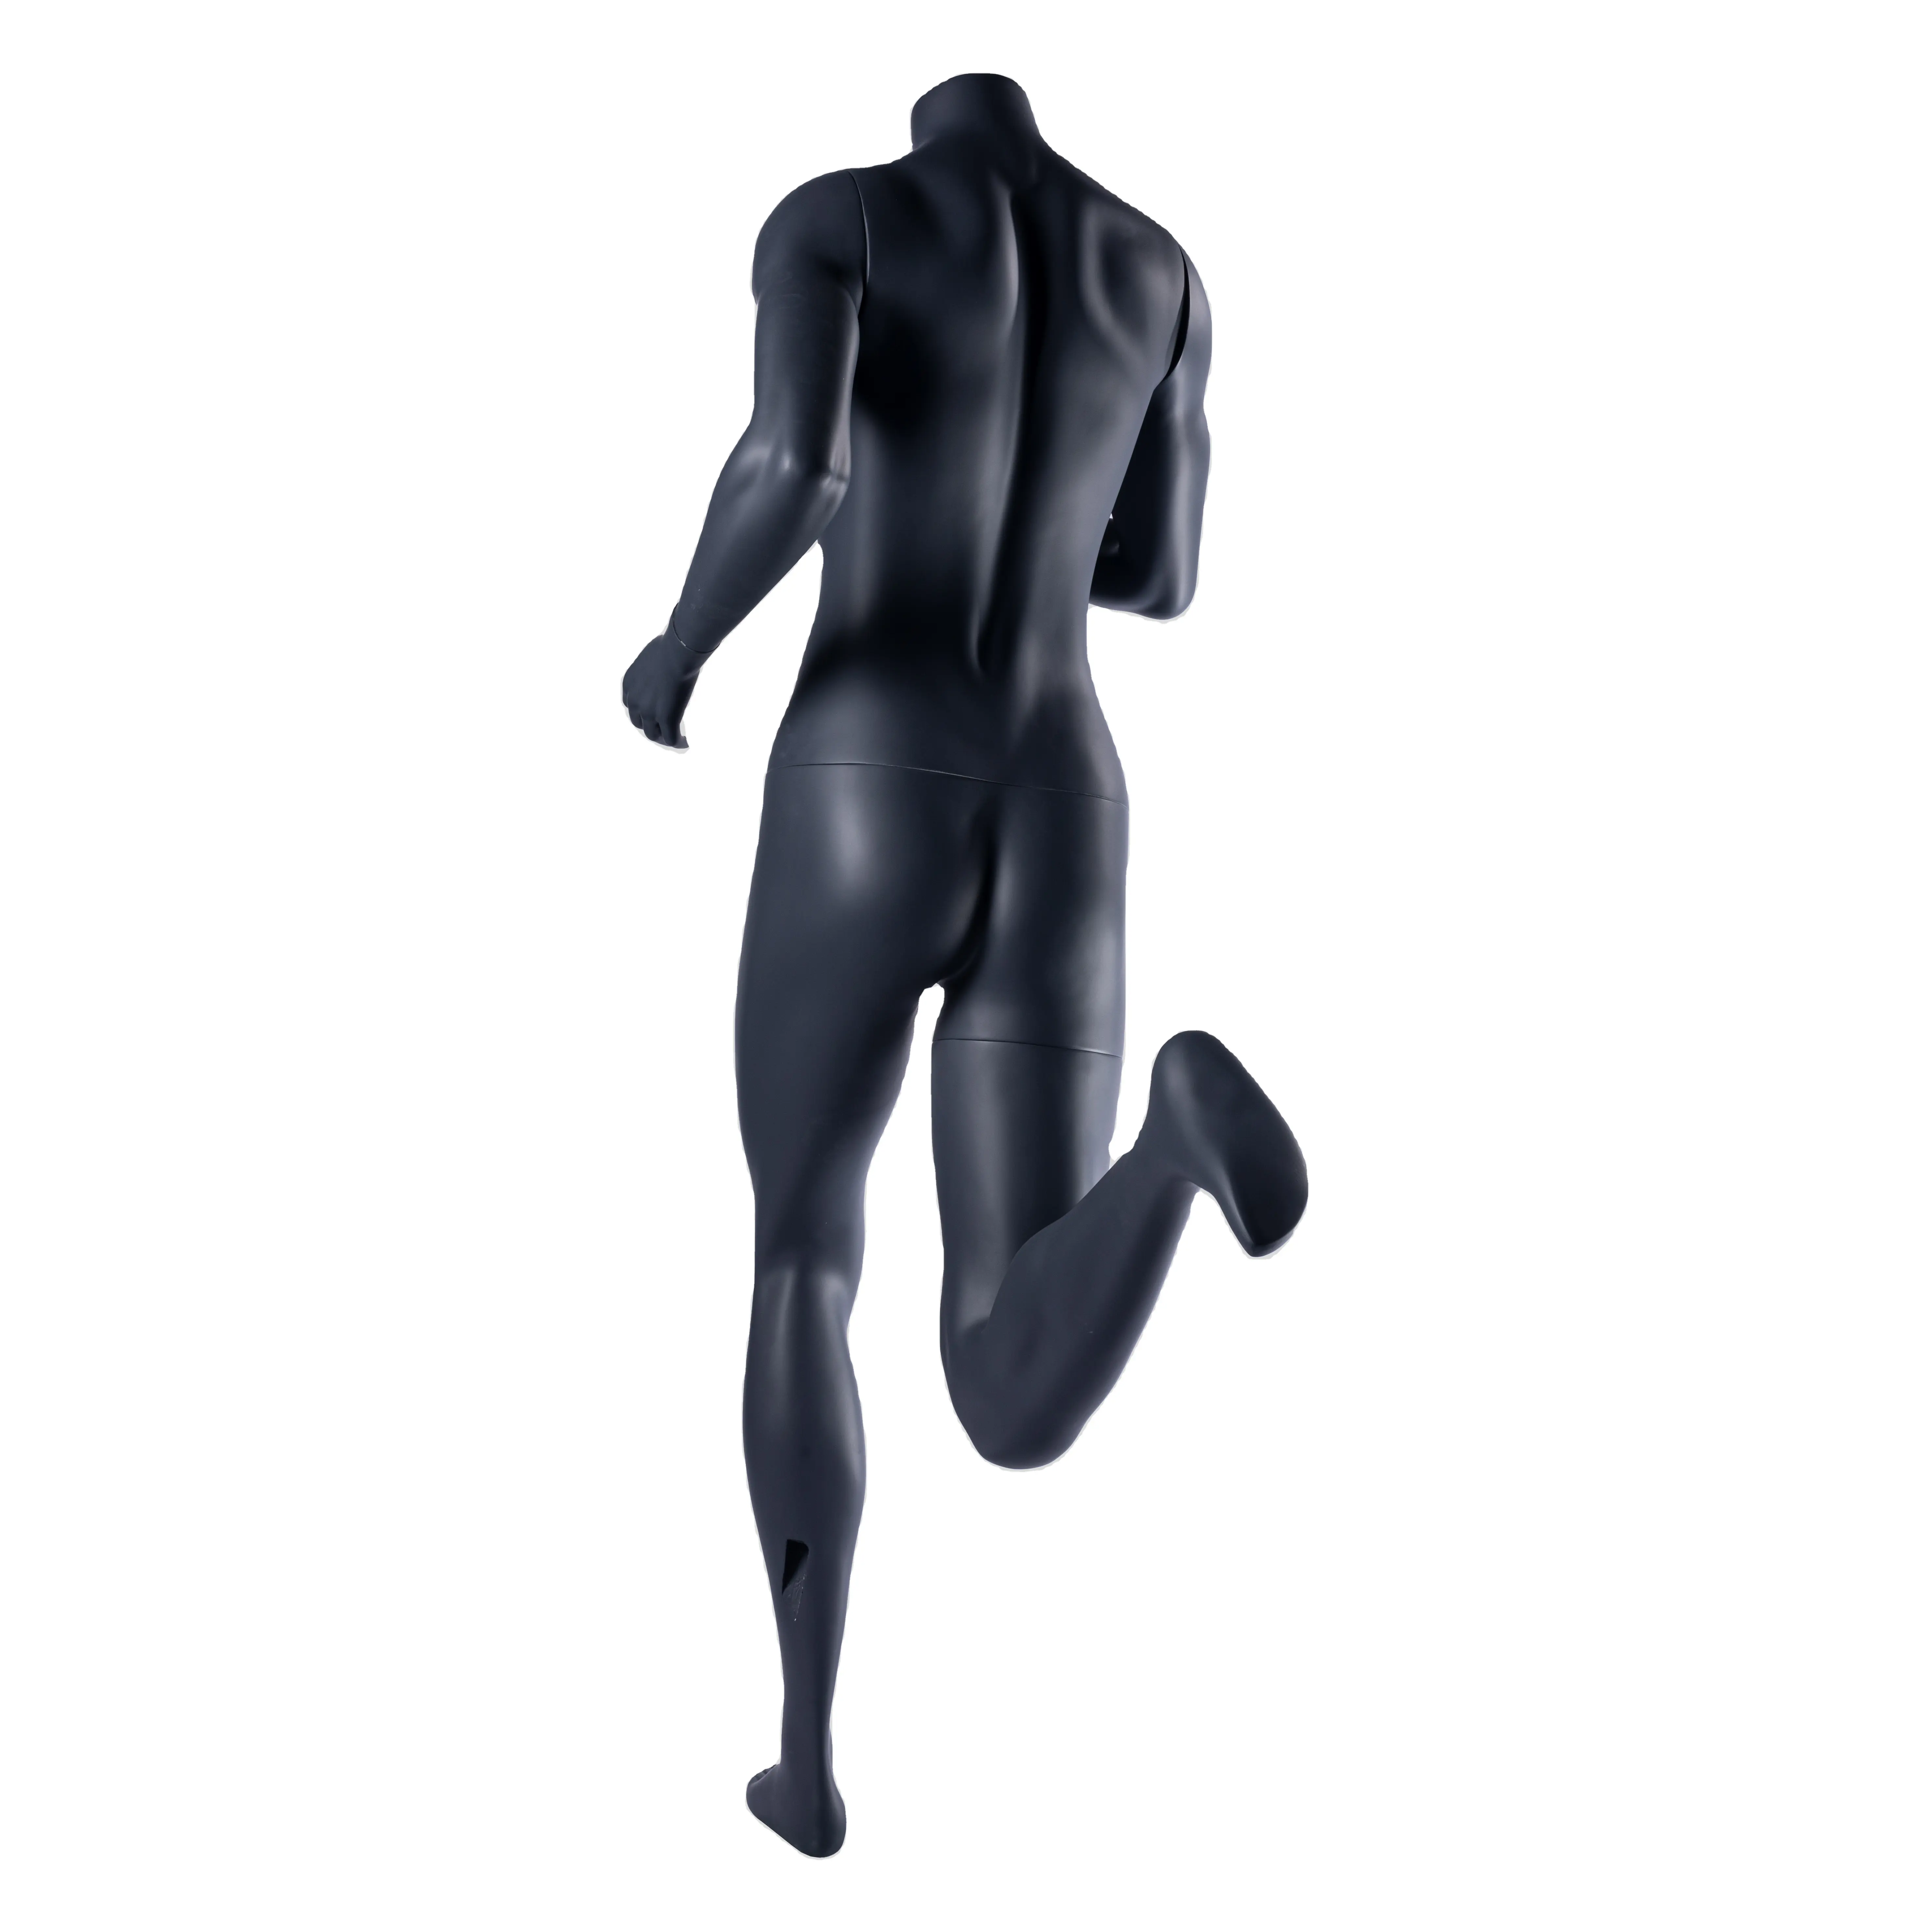 Maniquí de fibra de vidrio para exhibición de ropa Maniquíes deportivos para correr femeninos negros